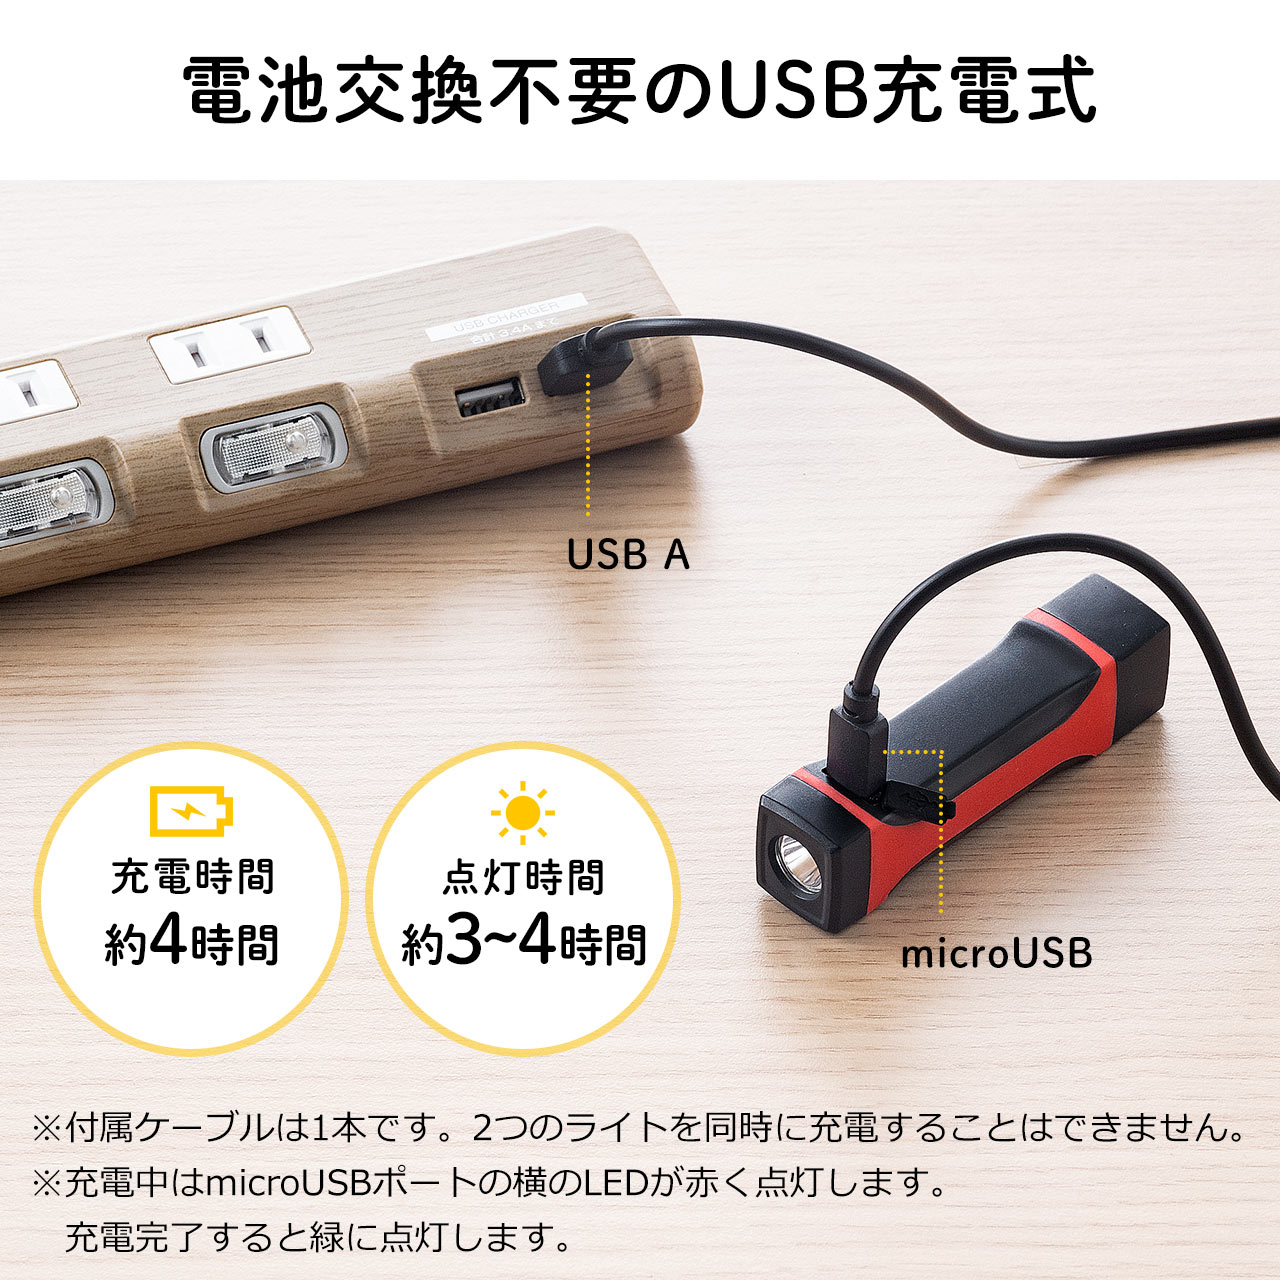 yGWZ[z|LED lbNCg LEDd USB[d hKiIPX4 ő120[ px }Olbg 800-LED042